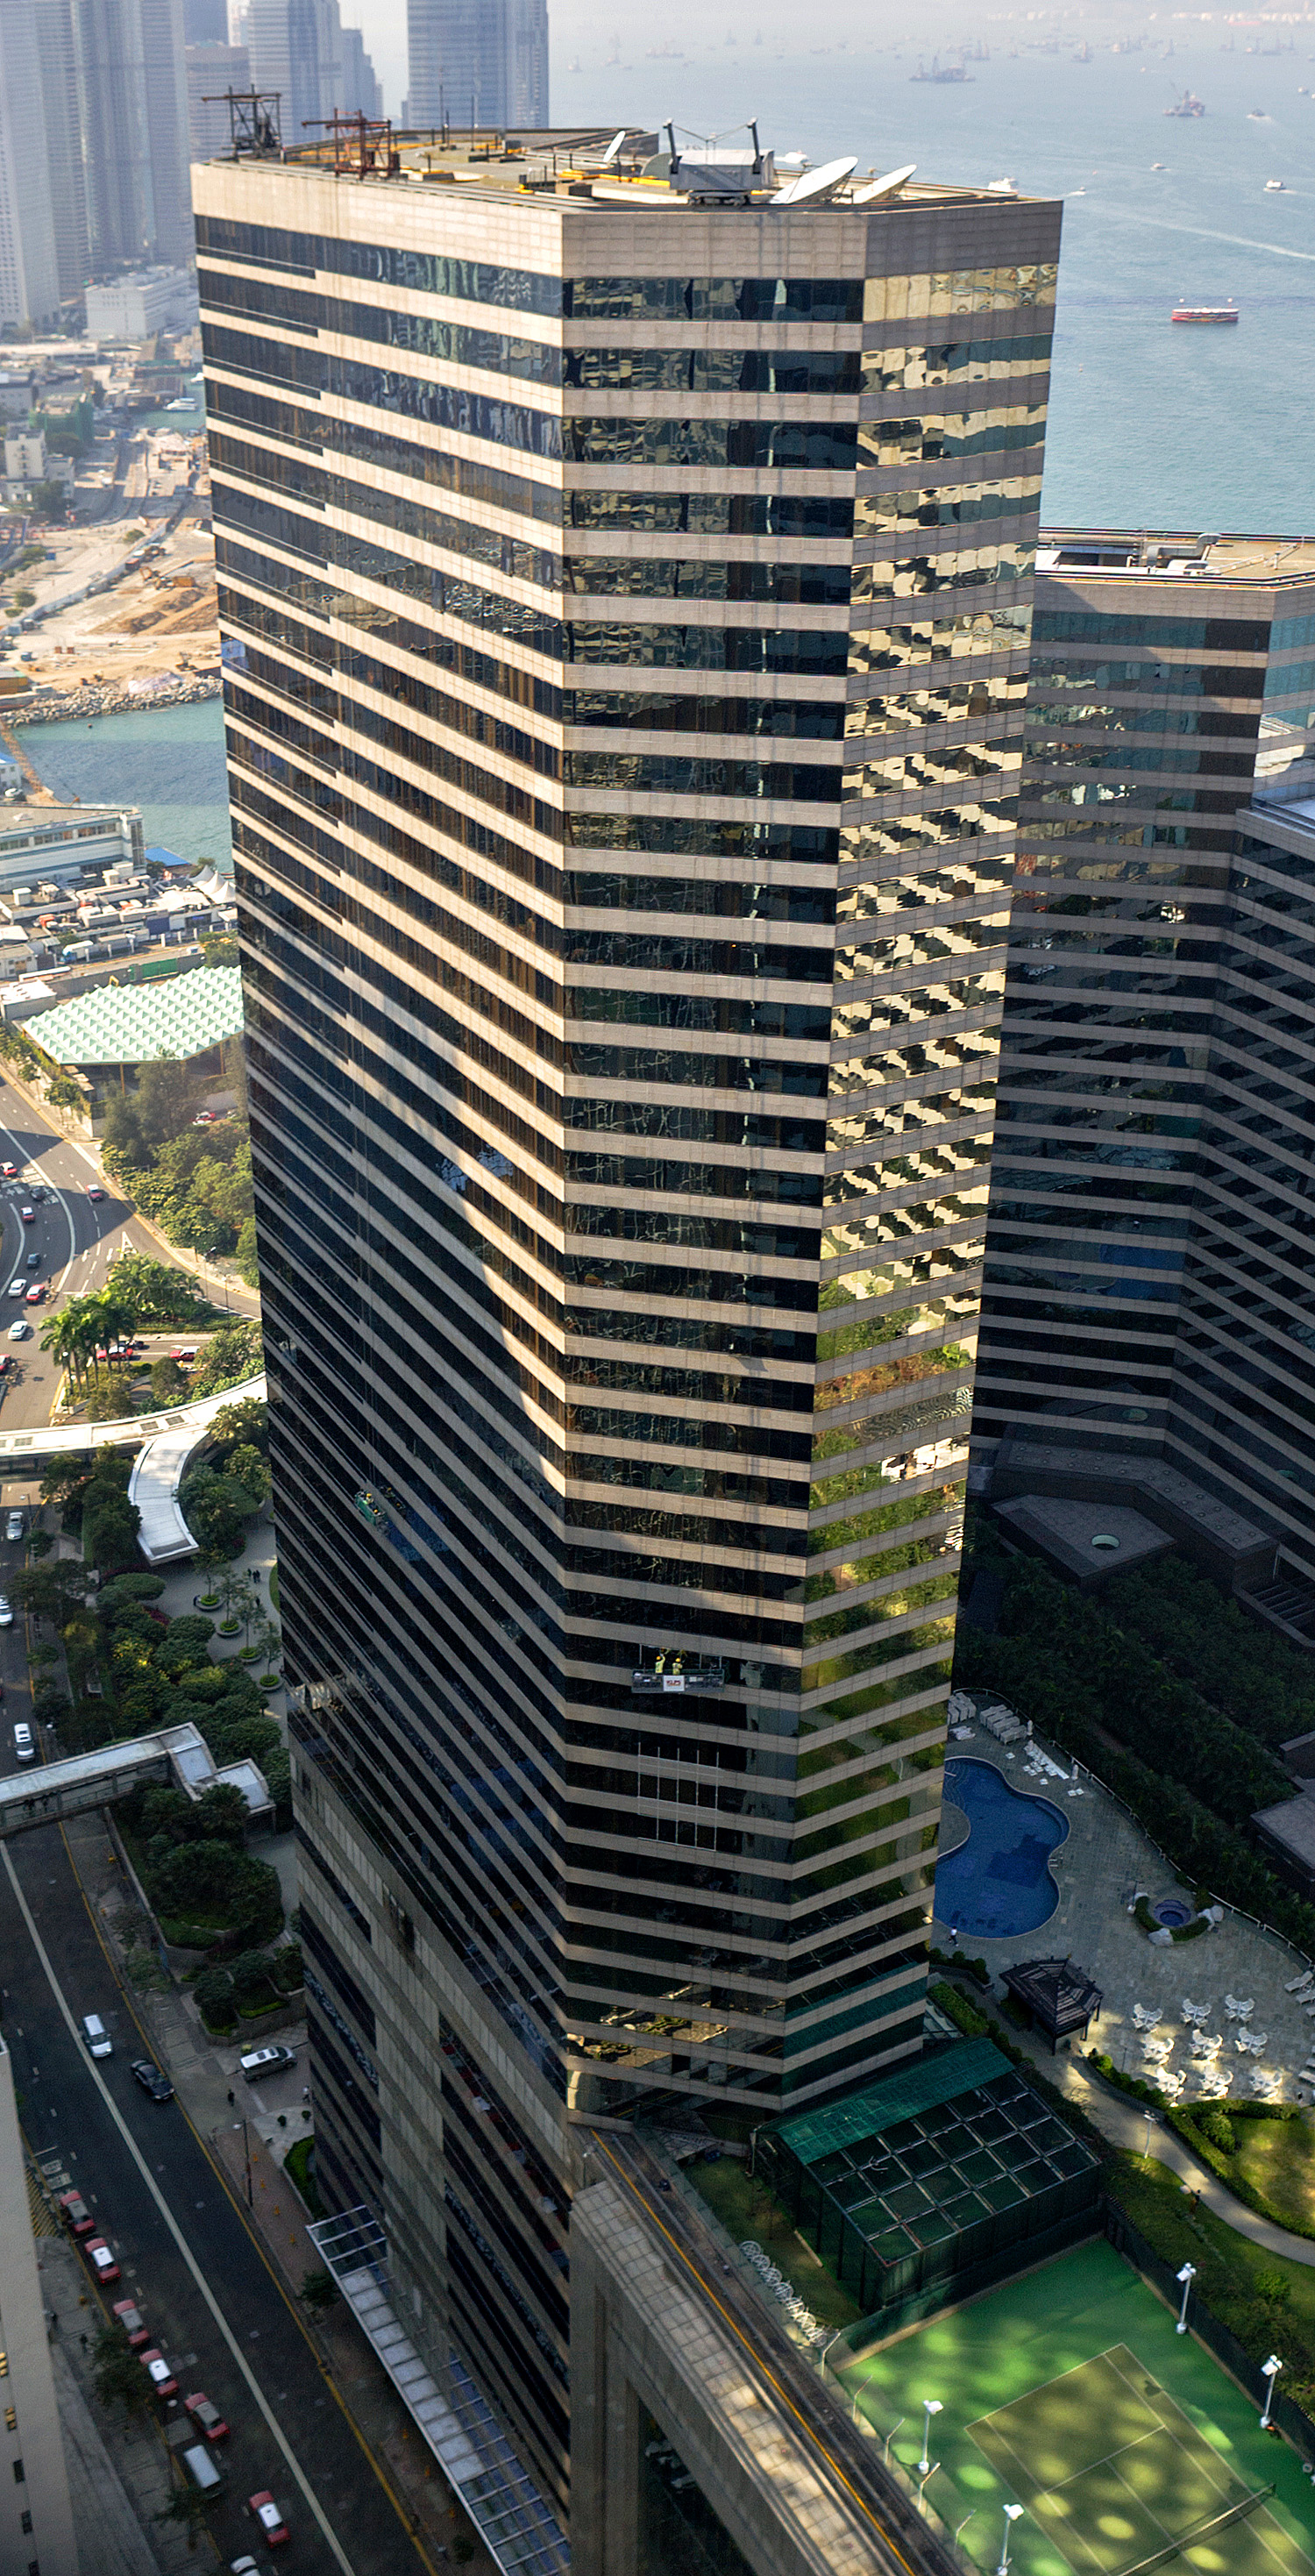 Grand Hyatt Serviced Apartments, Hong Kong - View from Central Plaza. © Mathias Beinling